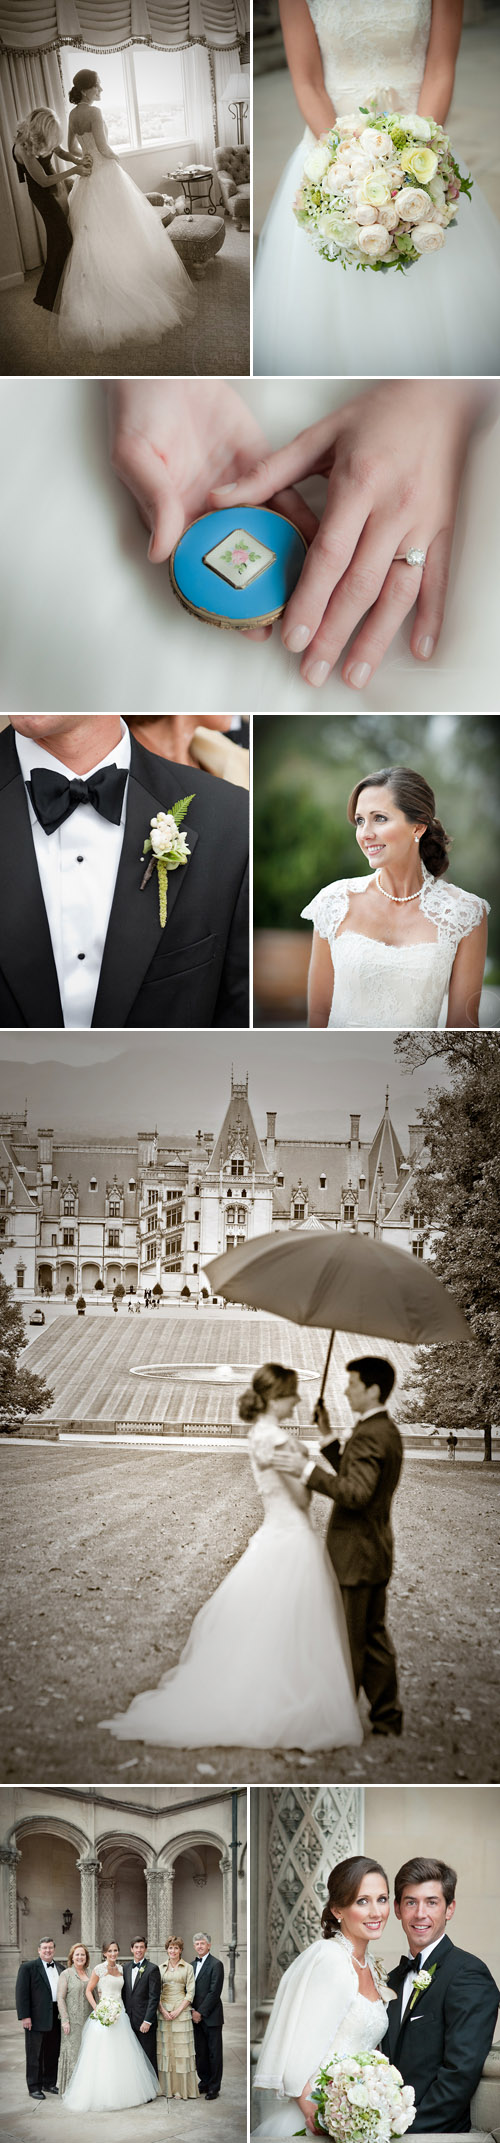 Biltmore Estate, Asheville, North Carolina fairytale real wedding, images by Woodward + Rick